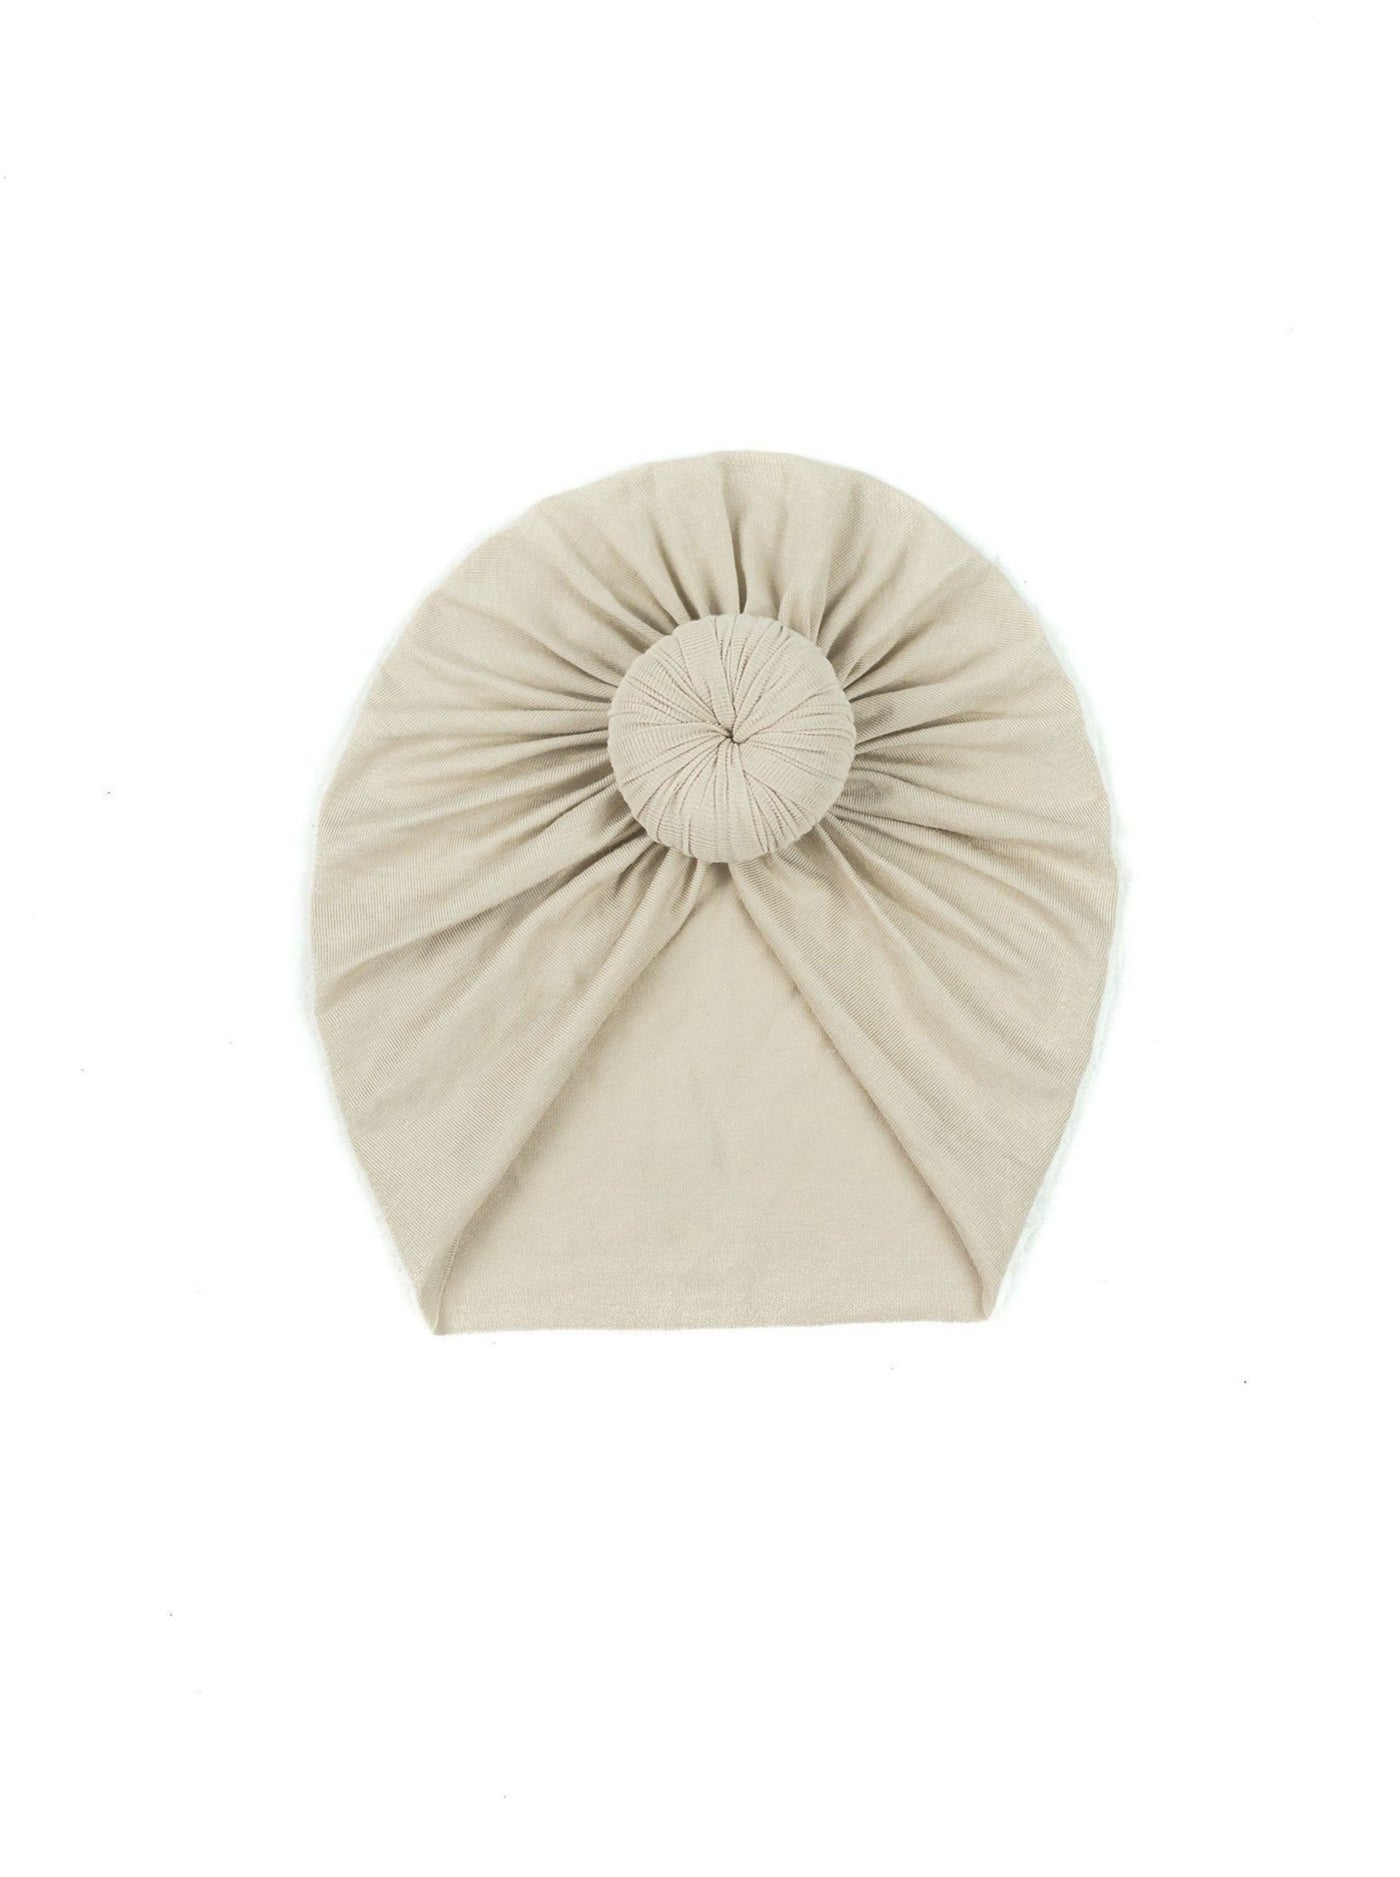 turban in sand colour